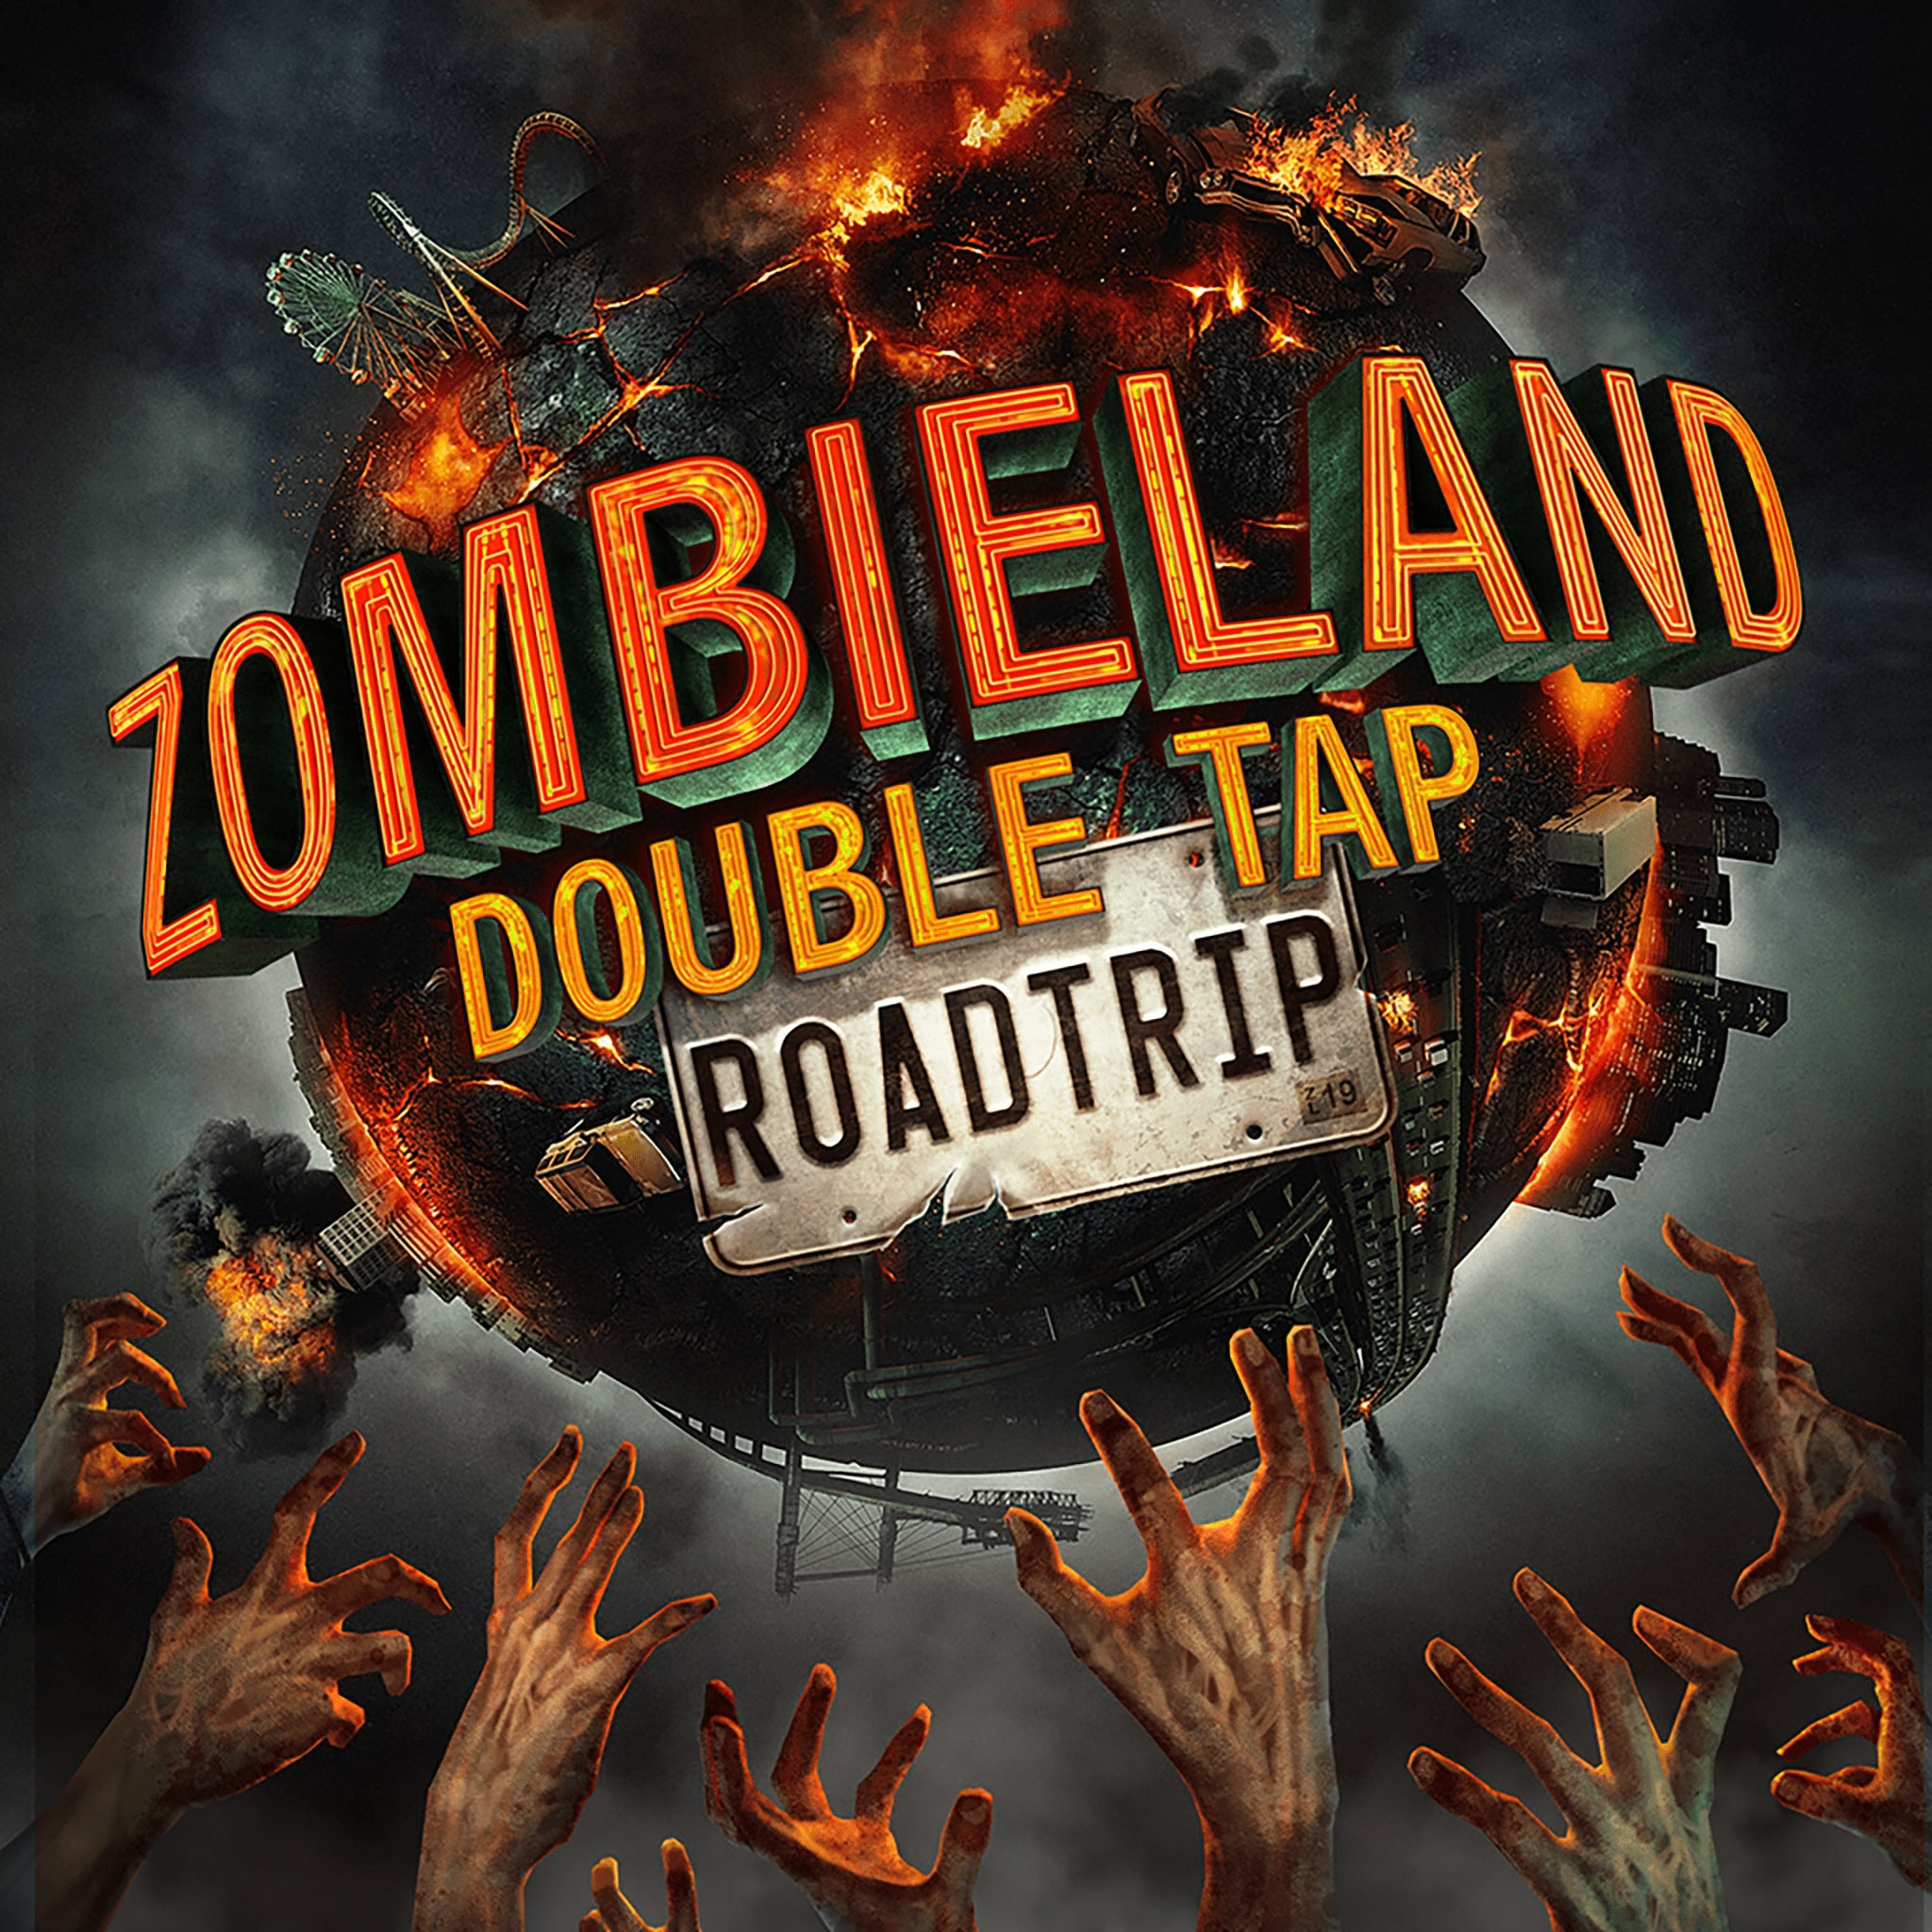 watch zombieland full movie online free